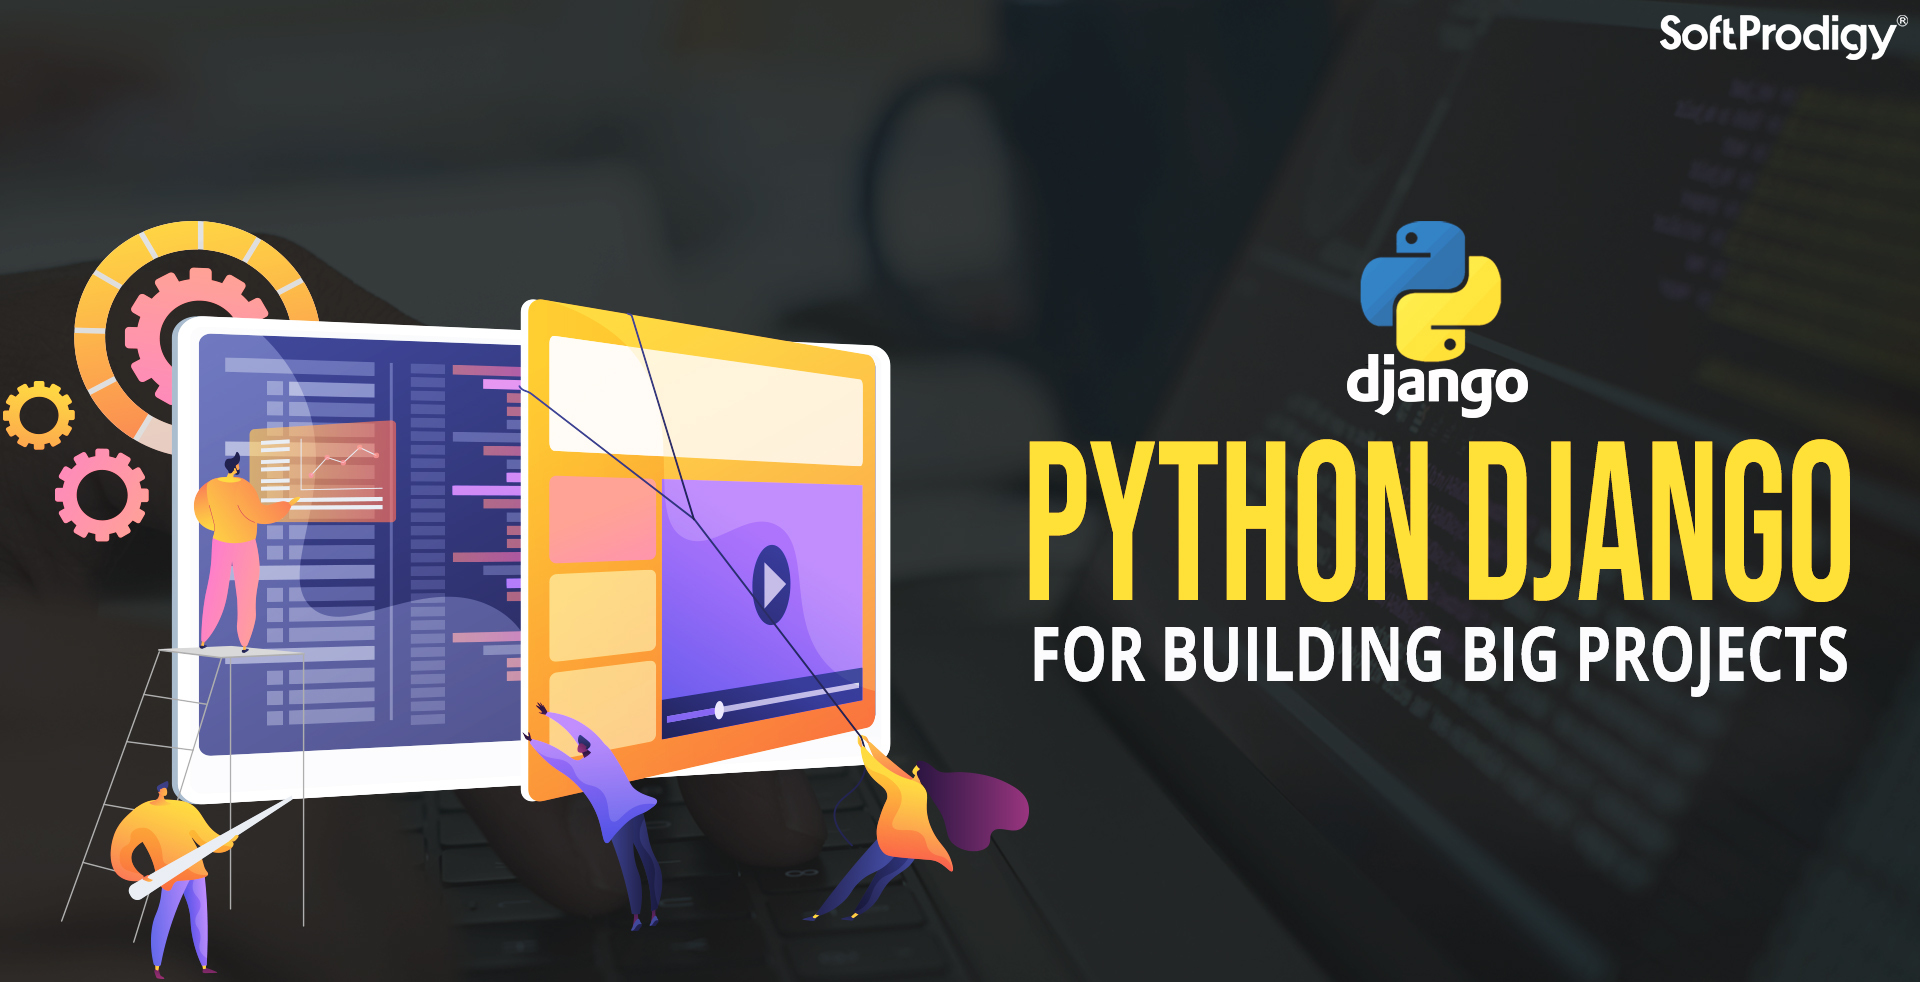 Python Django The Simple Application Framework To Build Big Projects